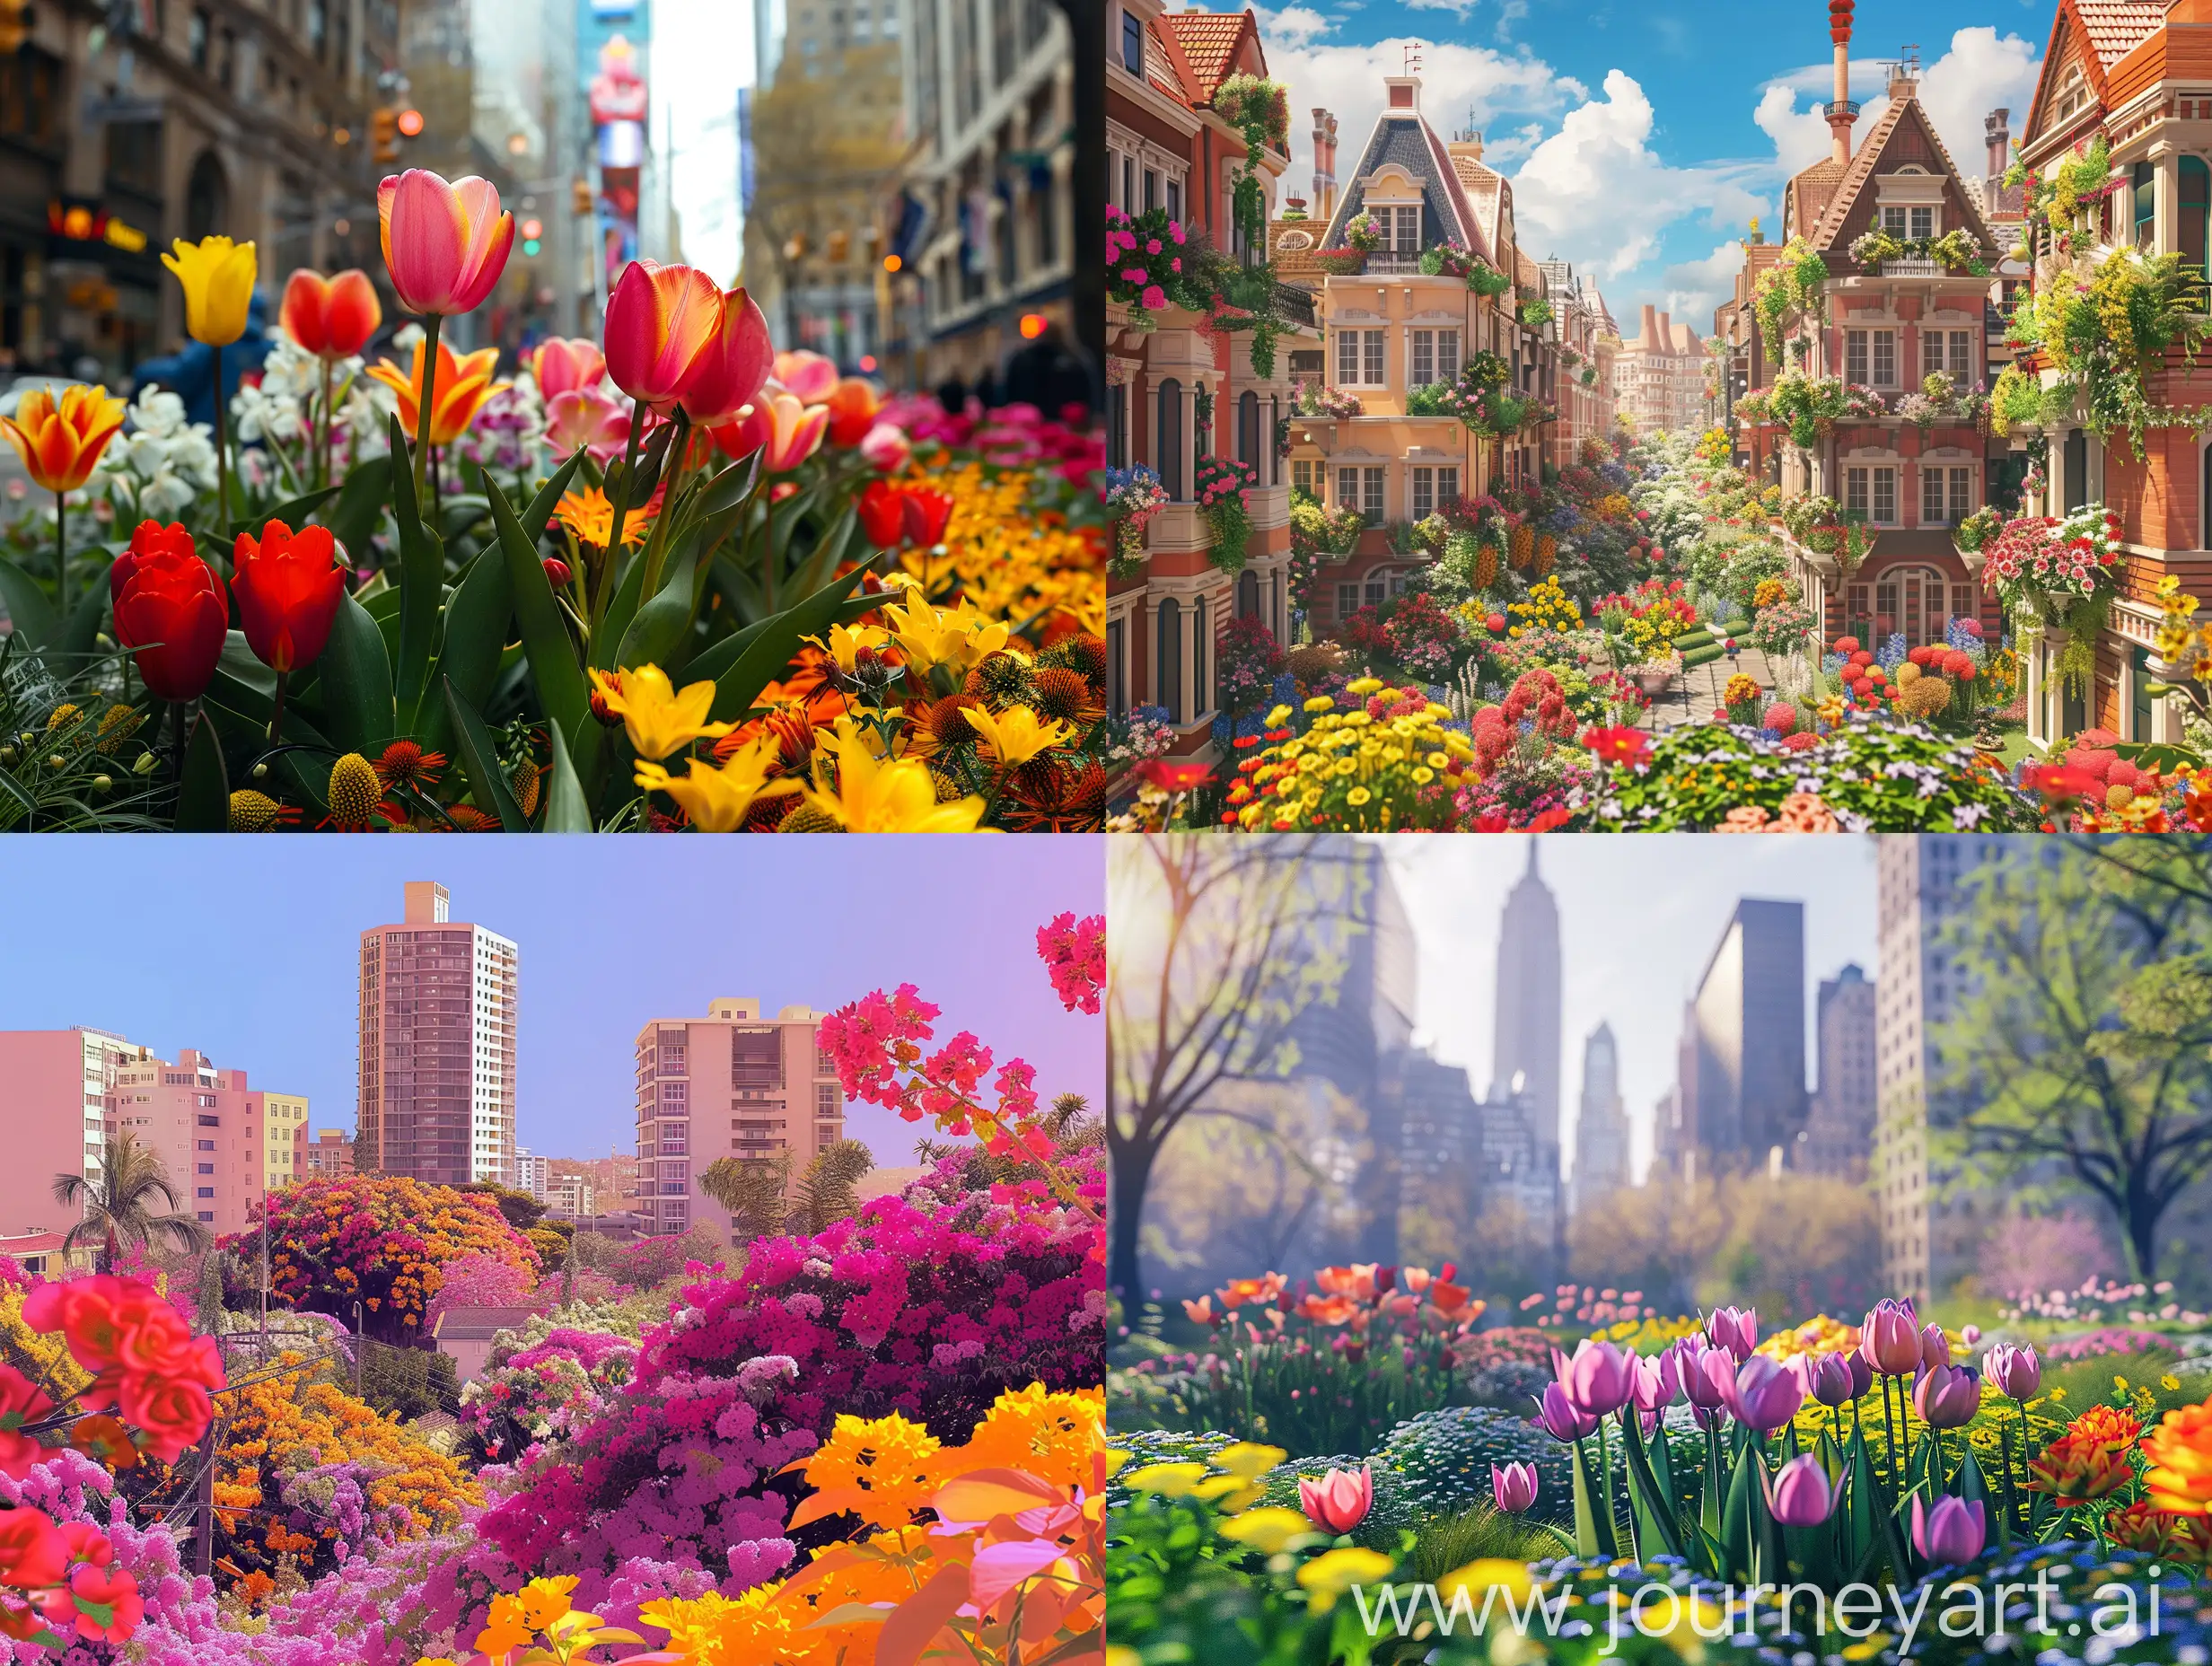 Vibrant-Urban-Landscape-with-Abundant-Flowers